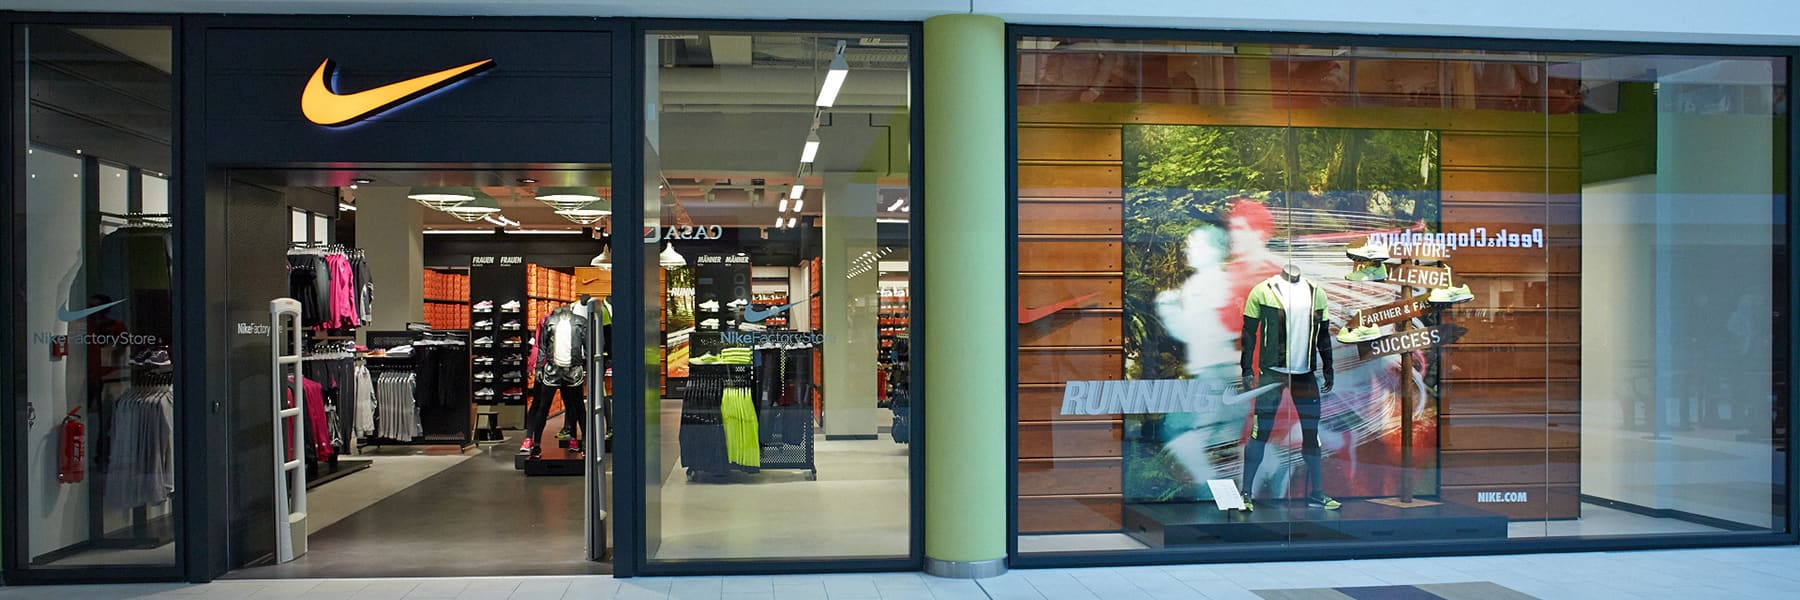 Nike Factory Store Berlin Wildau, Brandenburg. Nike.com